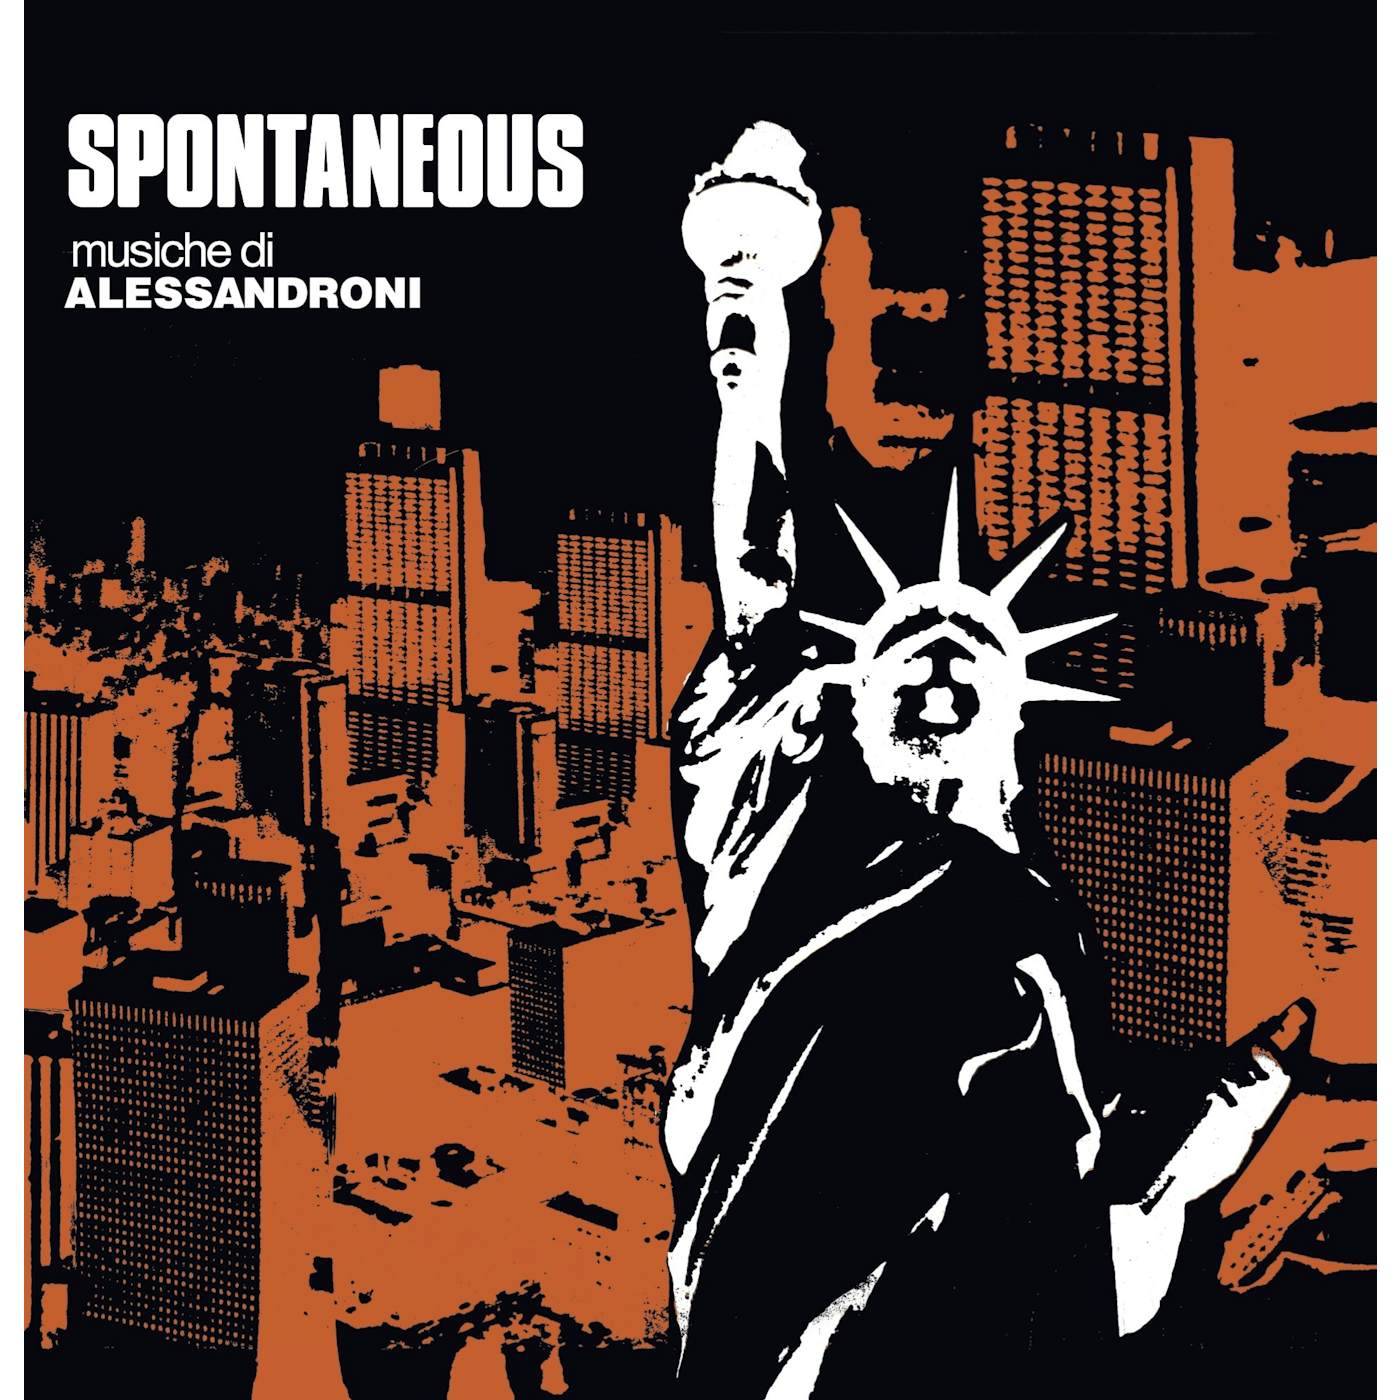 Alessandro Alessandroni Spontaneous Vinyl Record